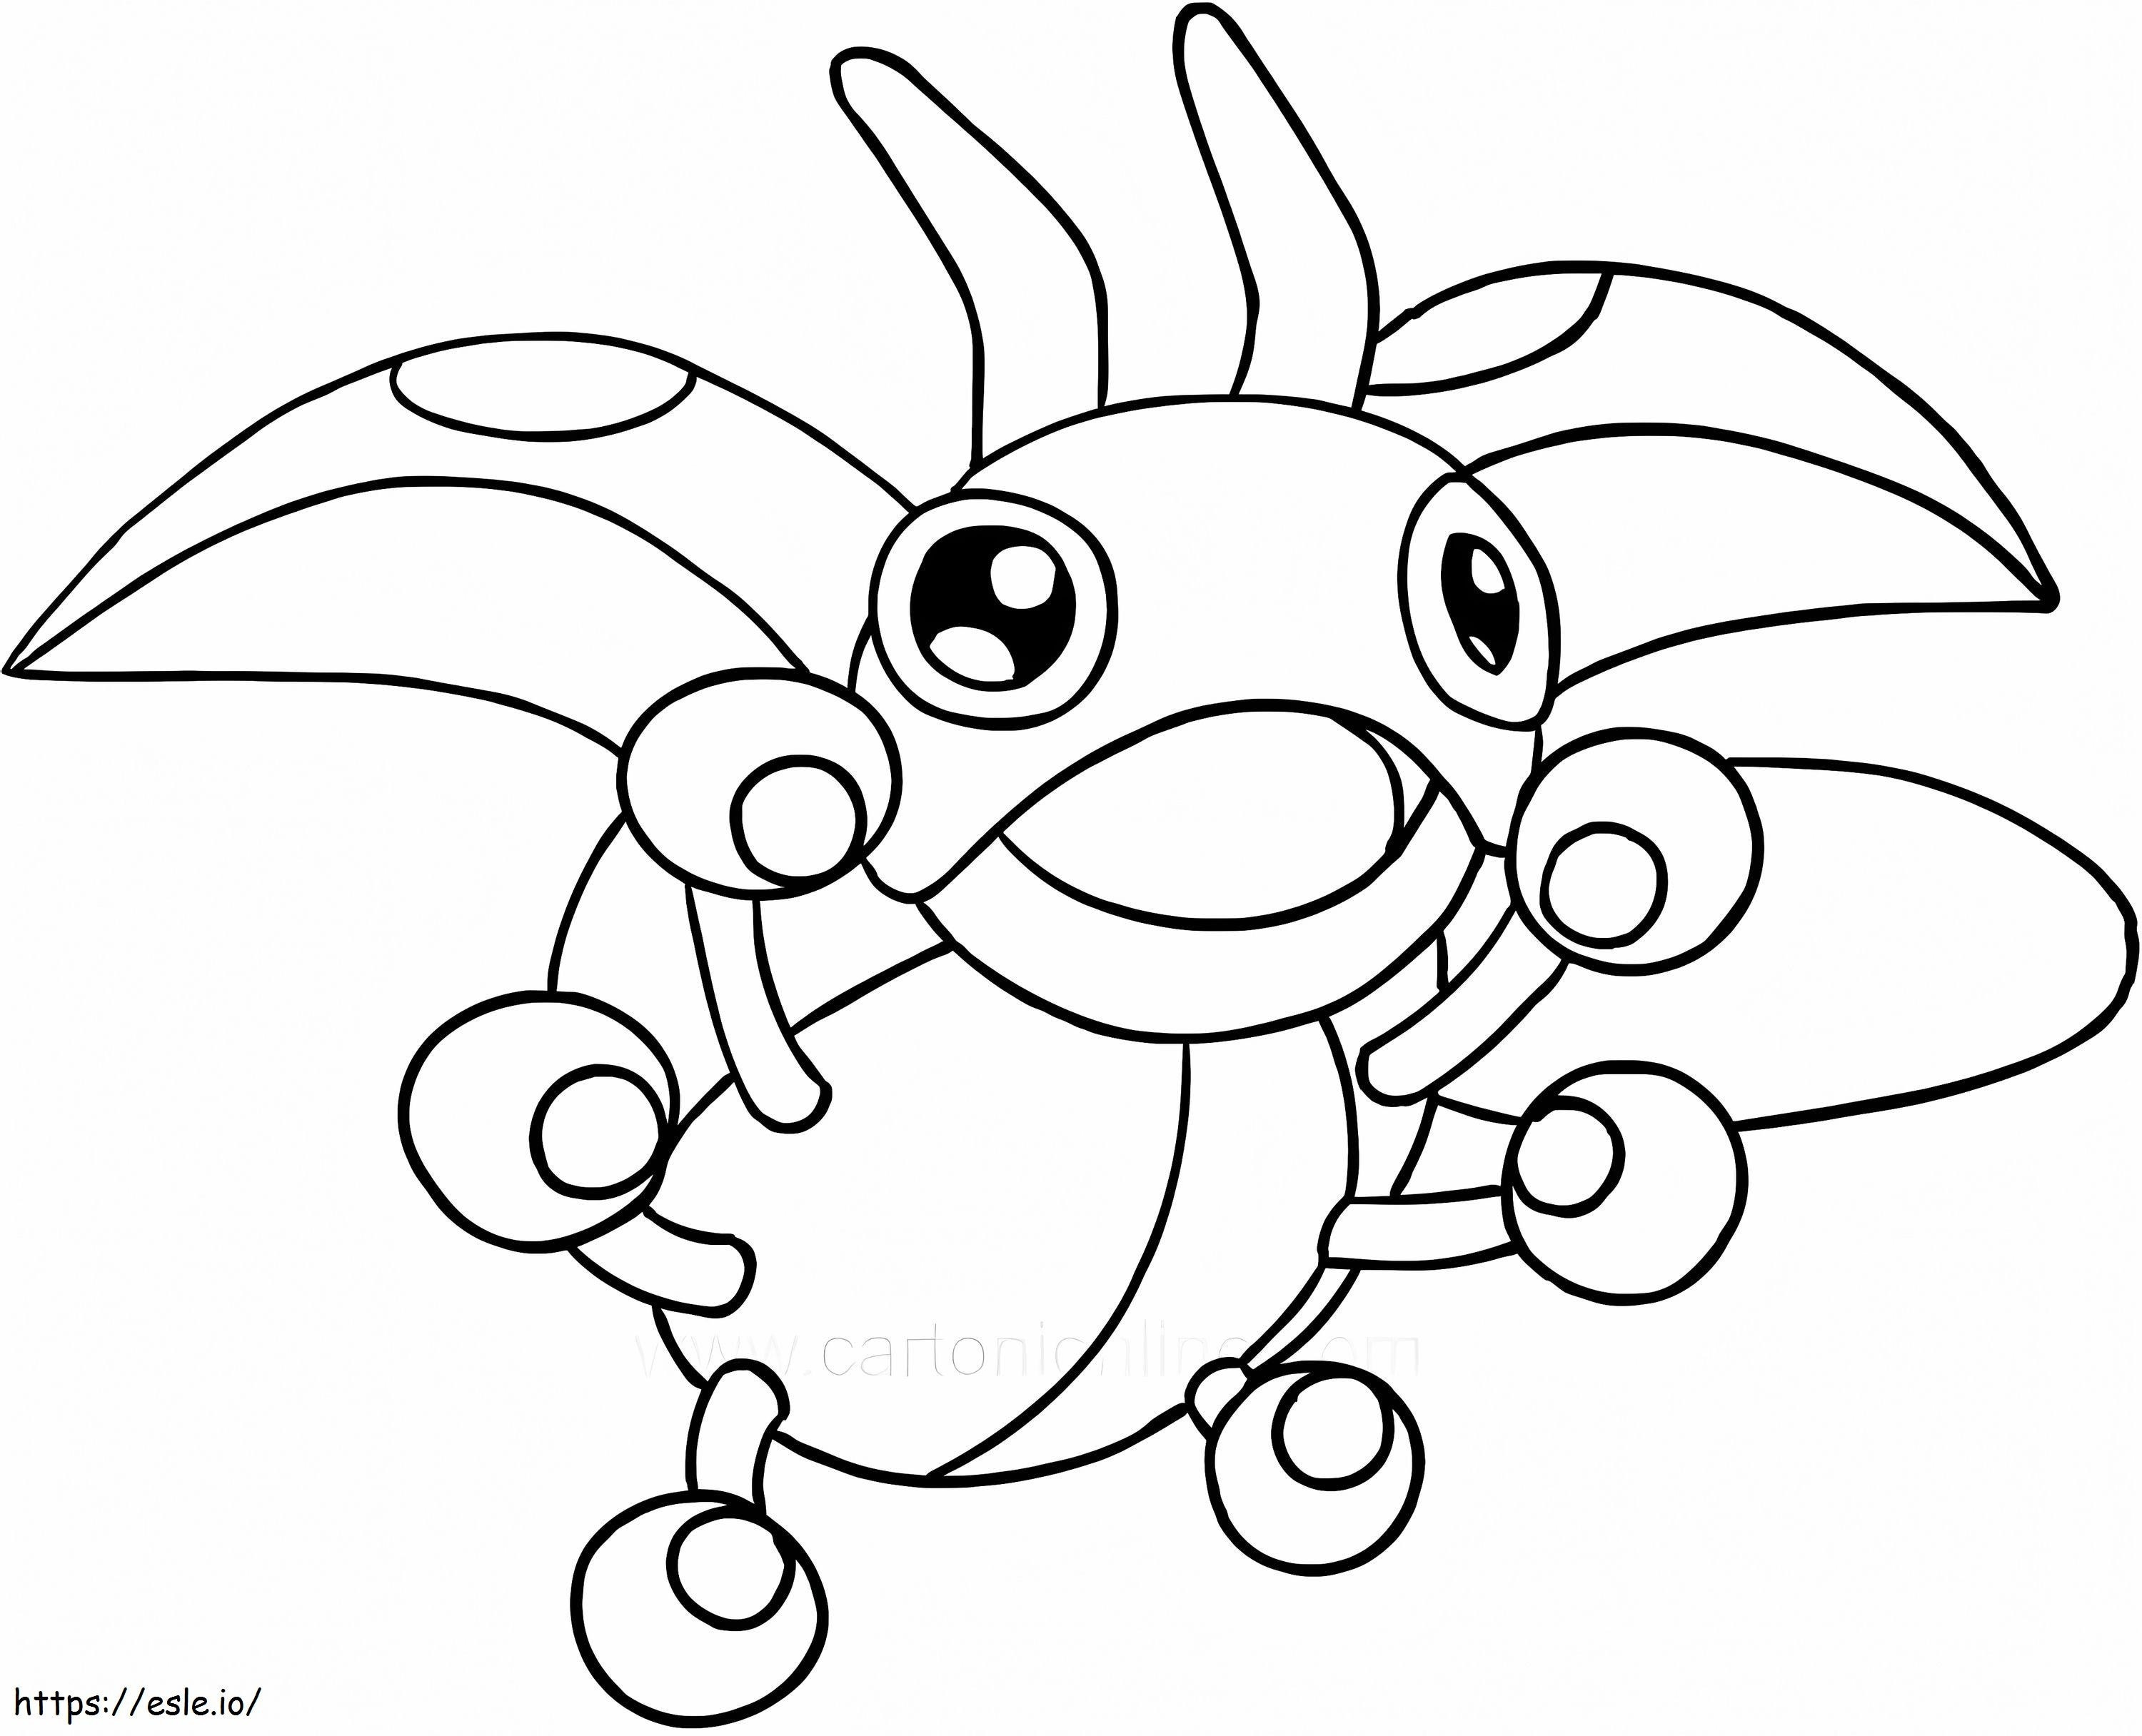 Druckbares Ledyba-Pokémon ausmalbilder